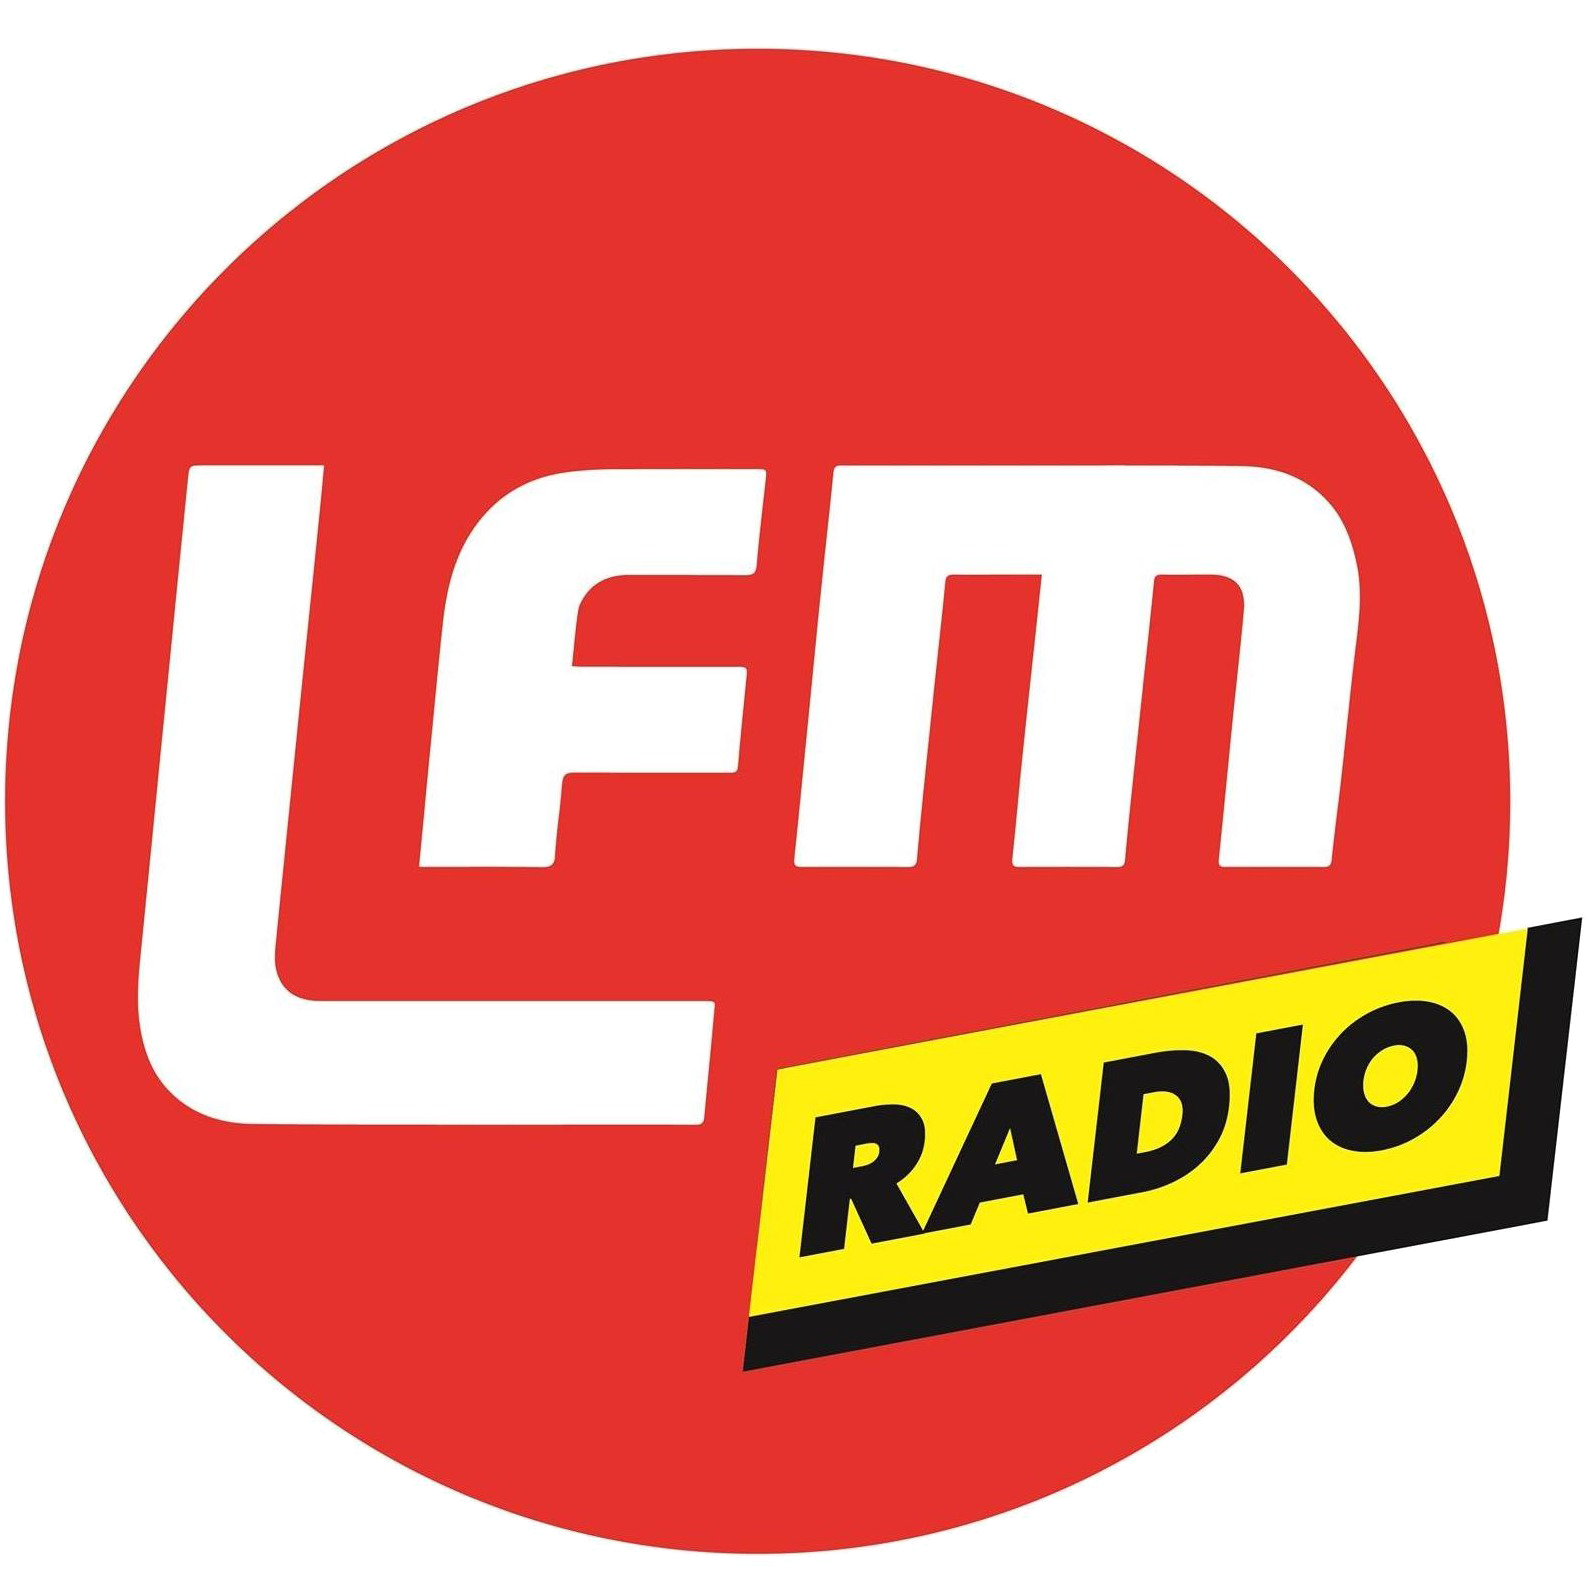 Lfm radio - Panach Seraing